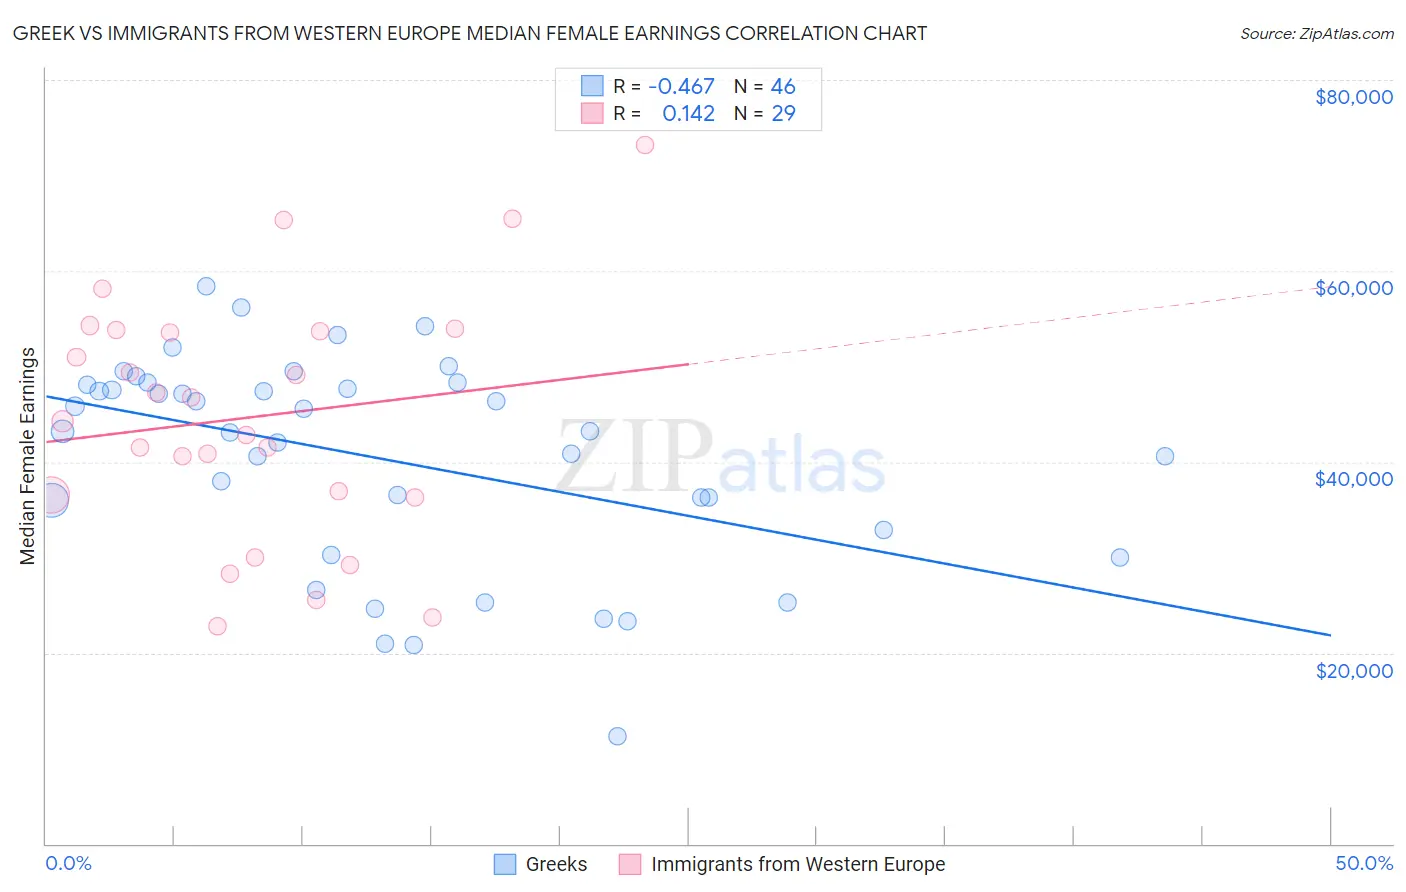 Greek vs Immigrants from Western Europe Median Female Earnings